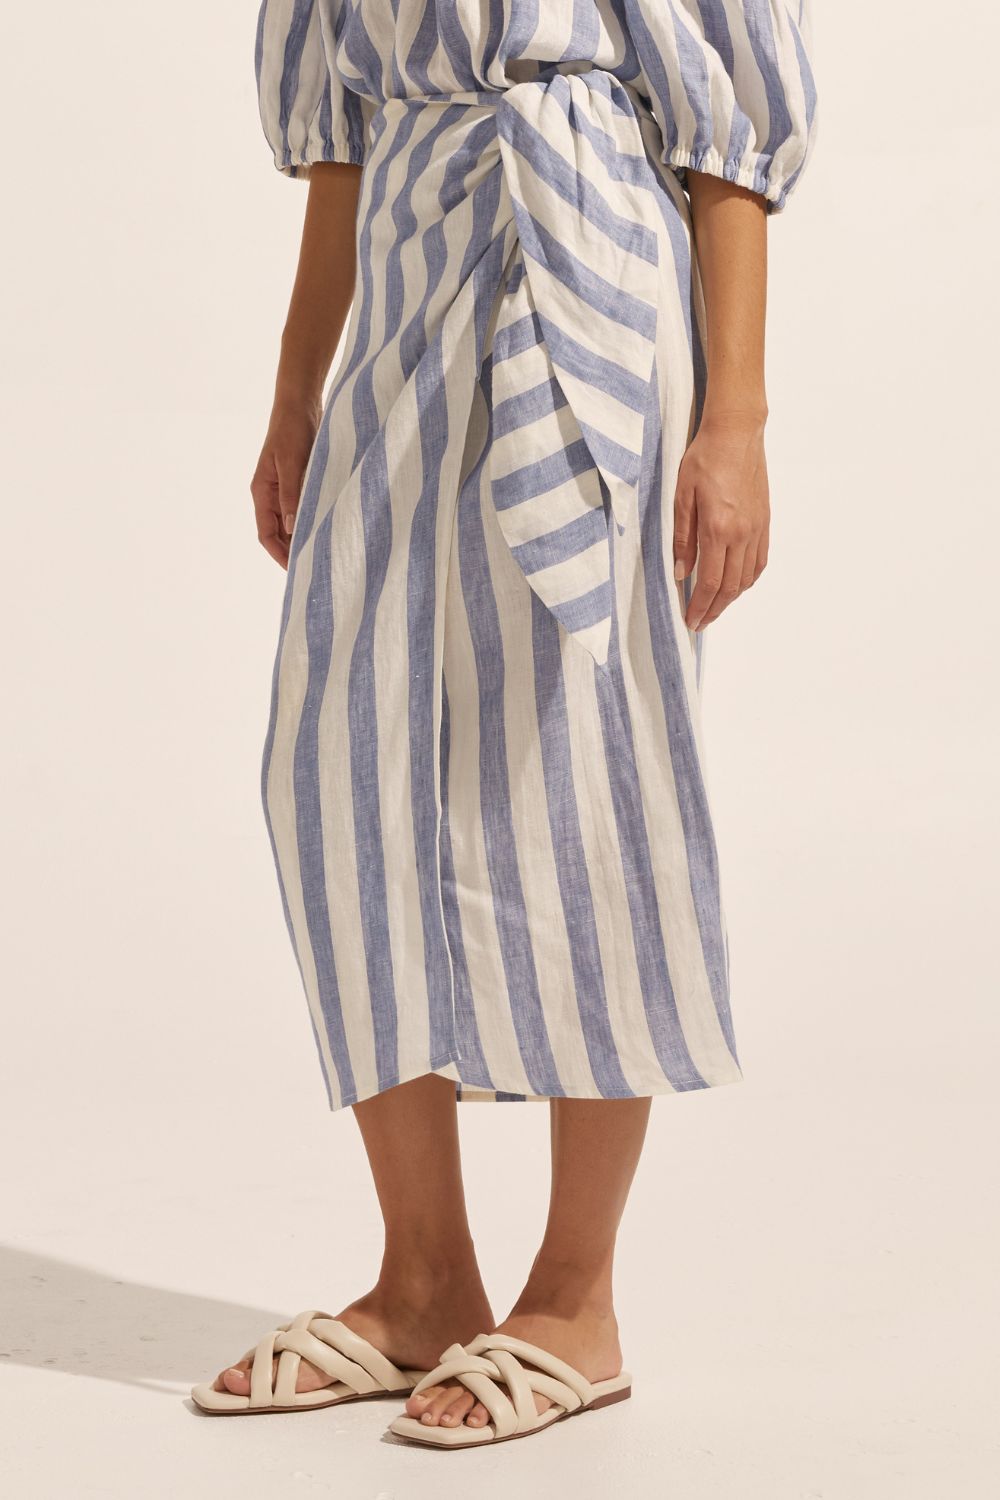 blue and white stripe, midi skirt, side tie, skirt, side view